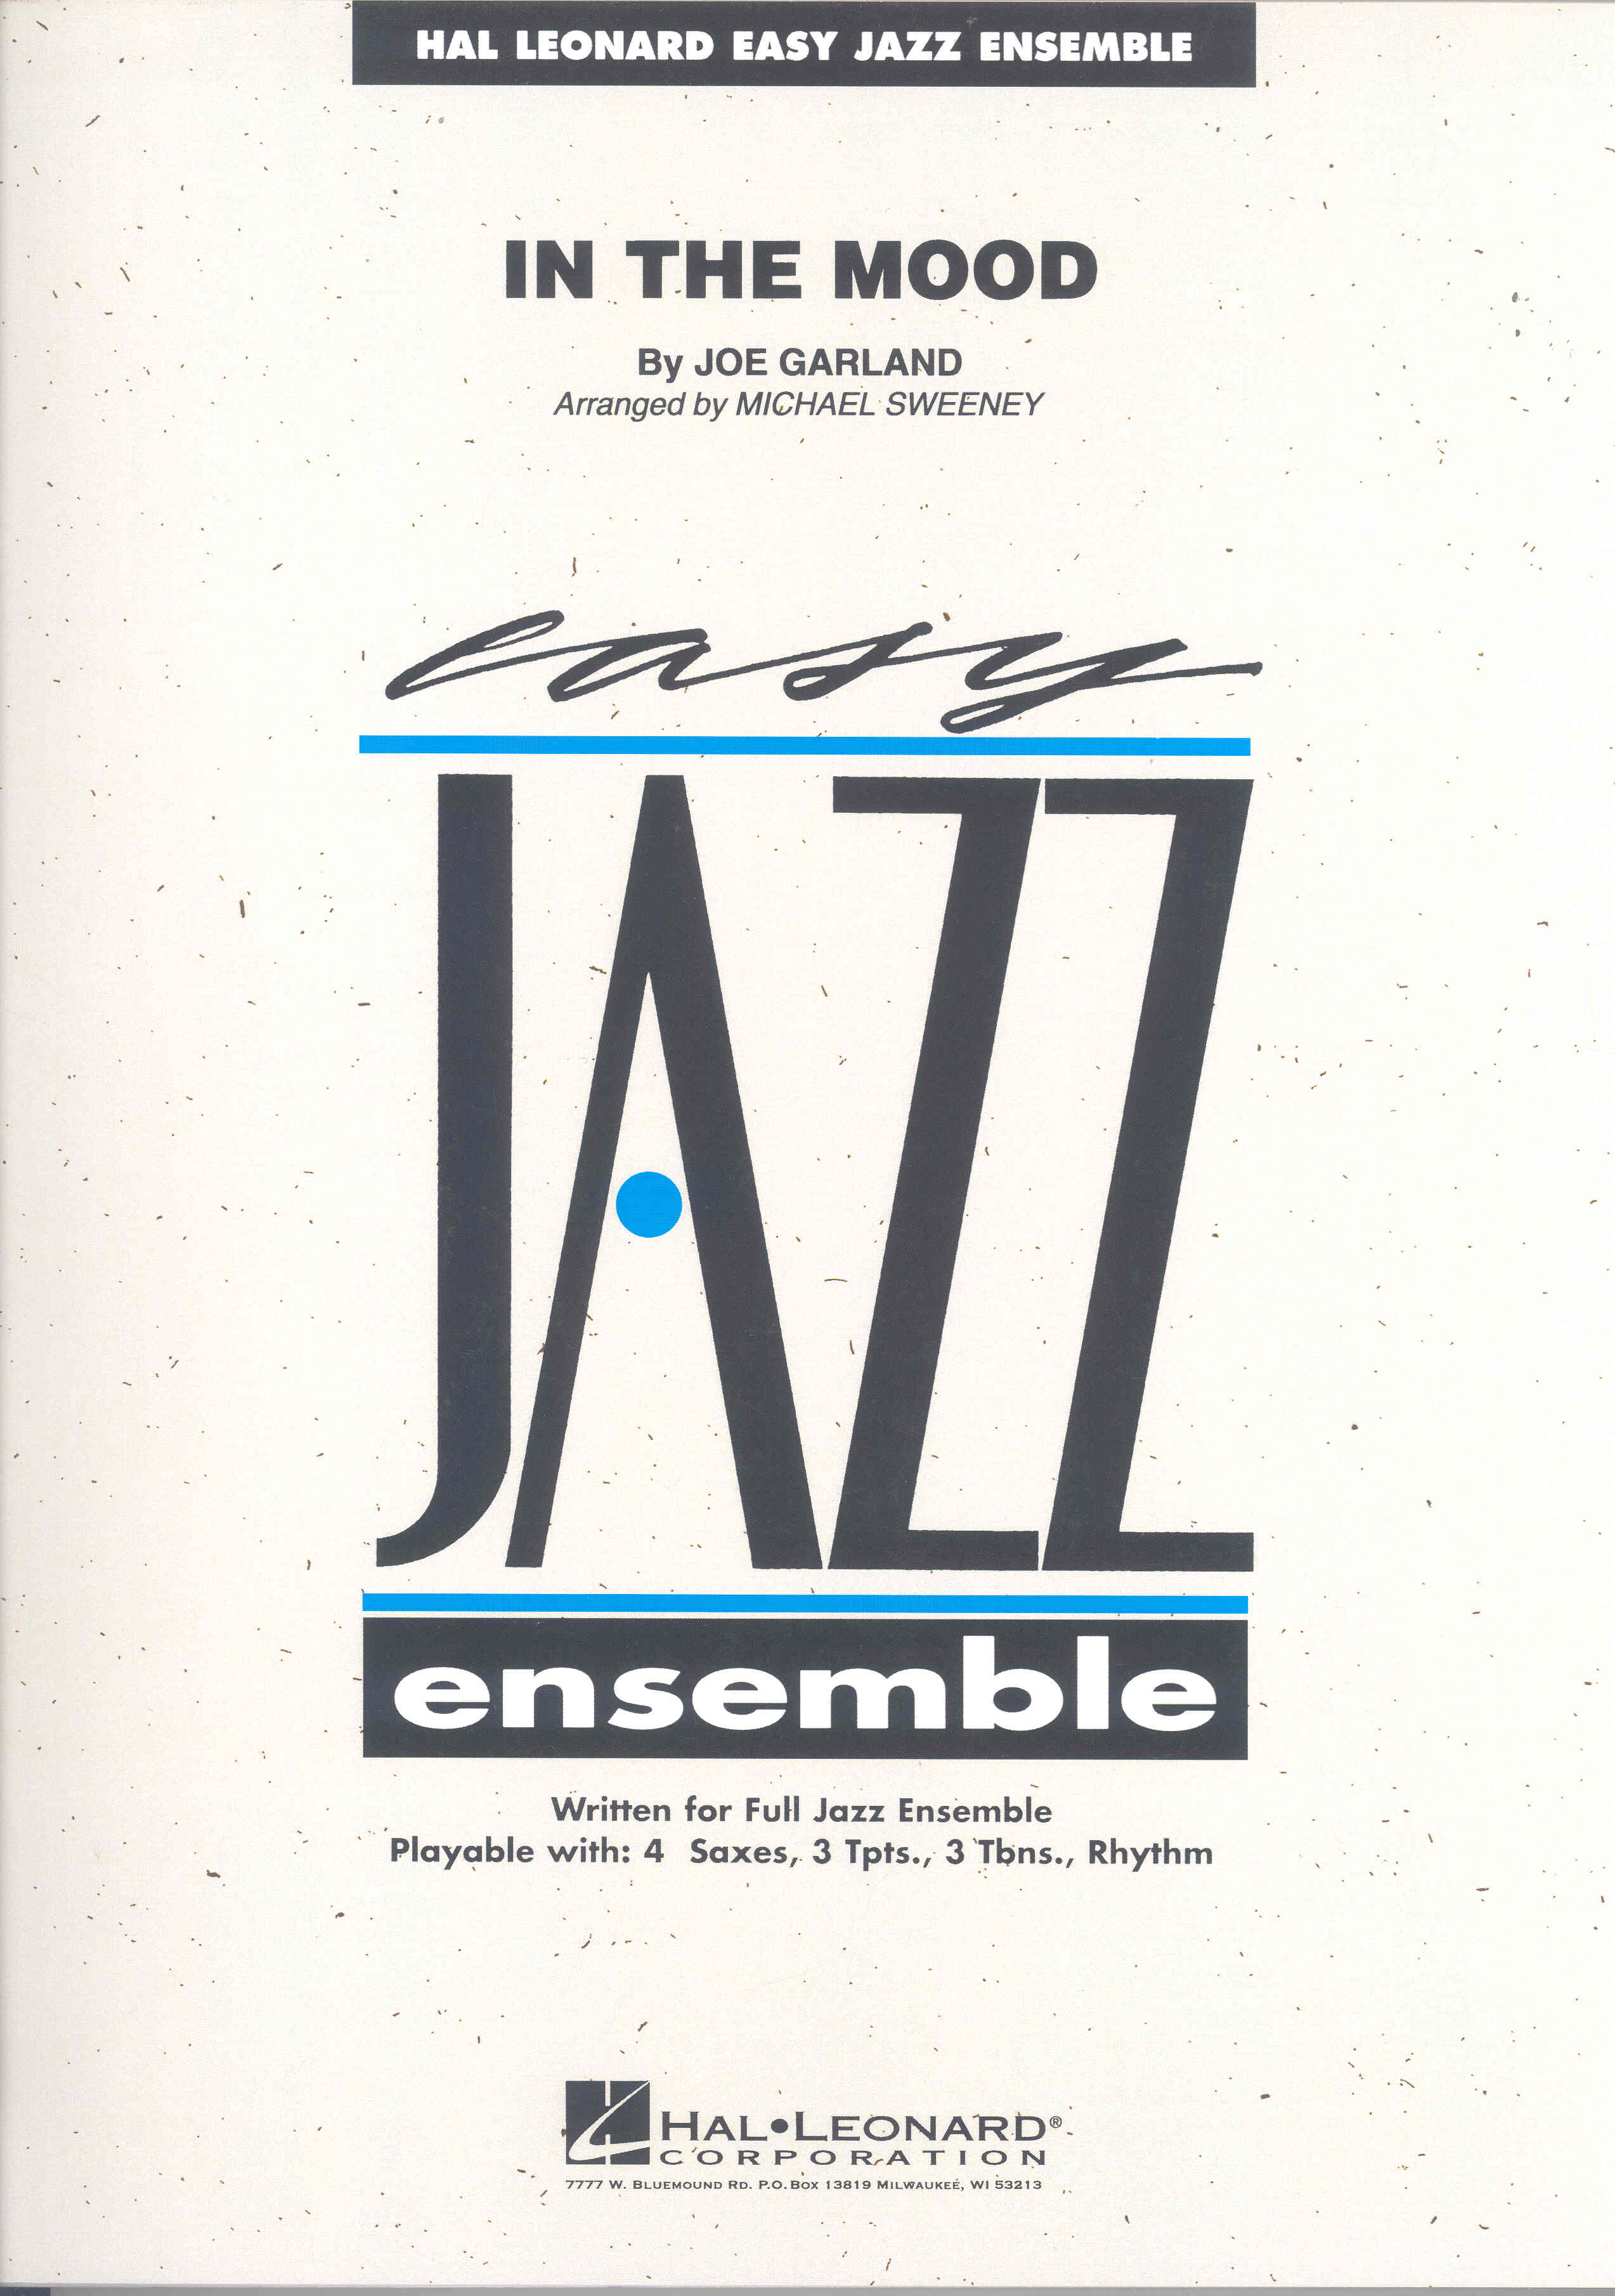 In The Mood Garland Hal Leonard Easy Jazz Ensemble Sheet Music Songbook